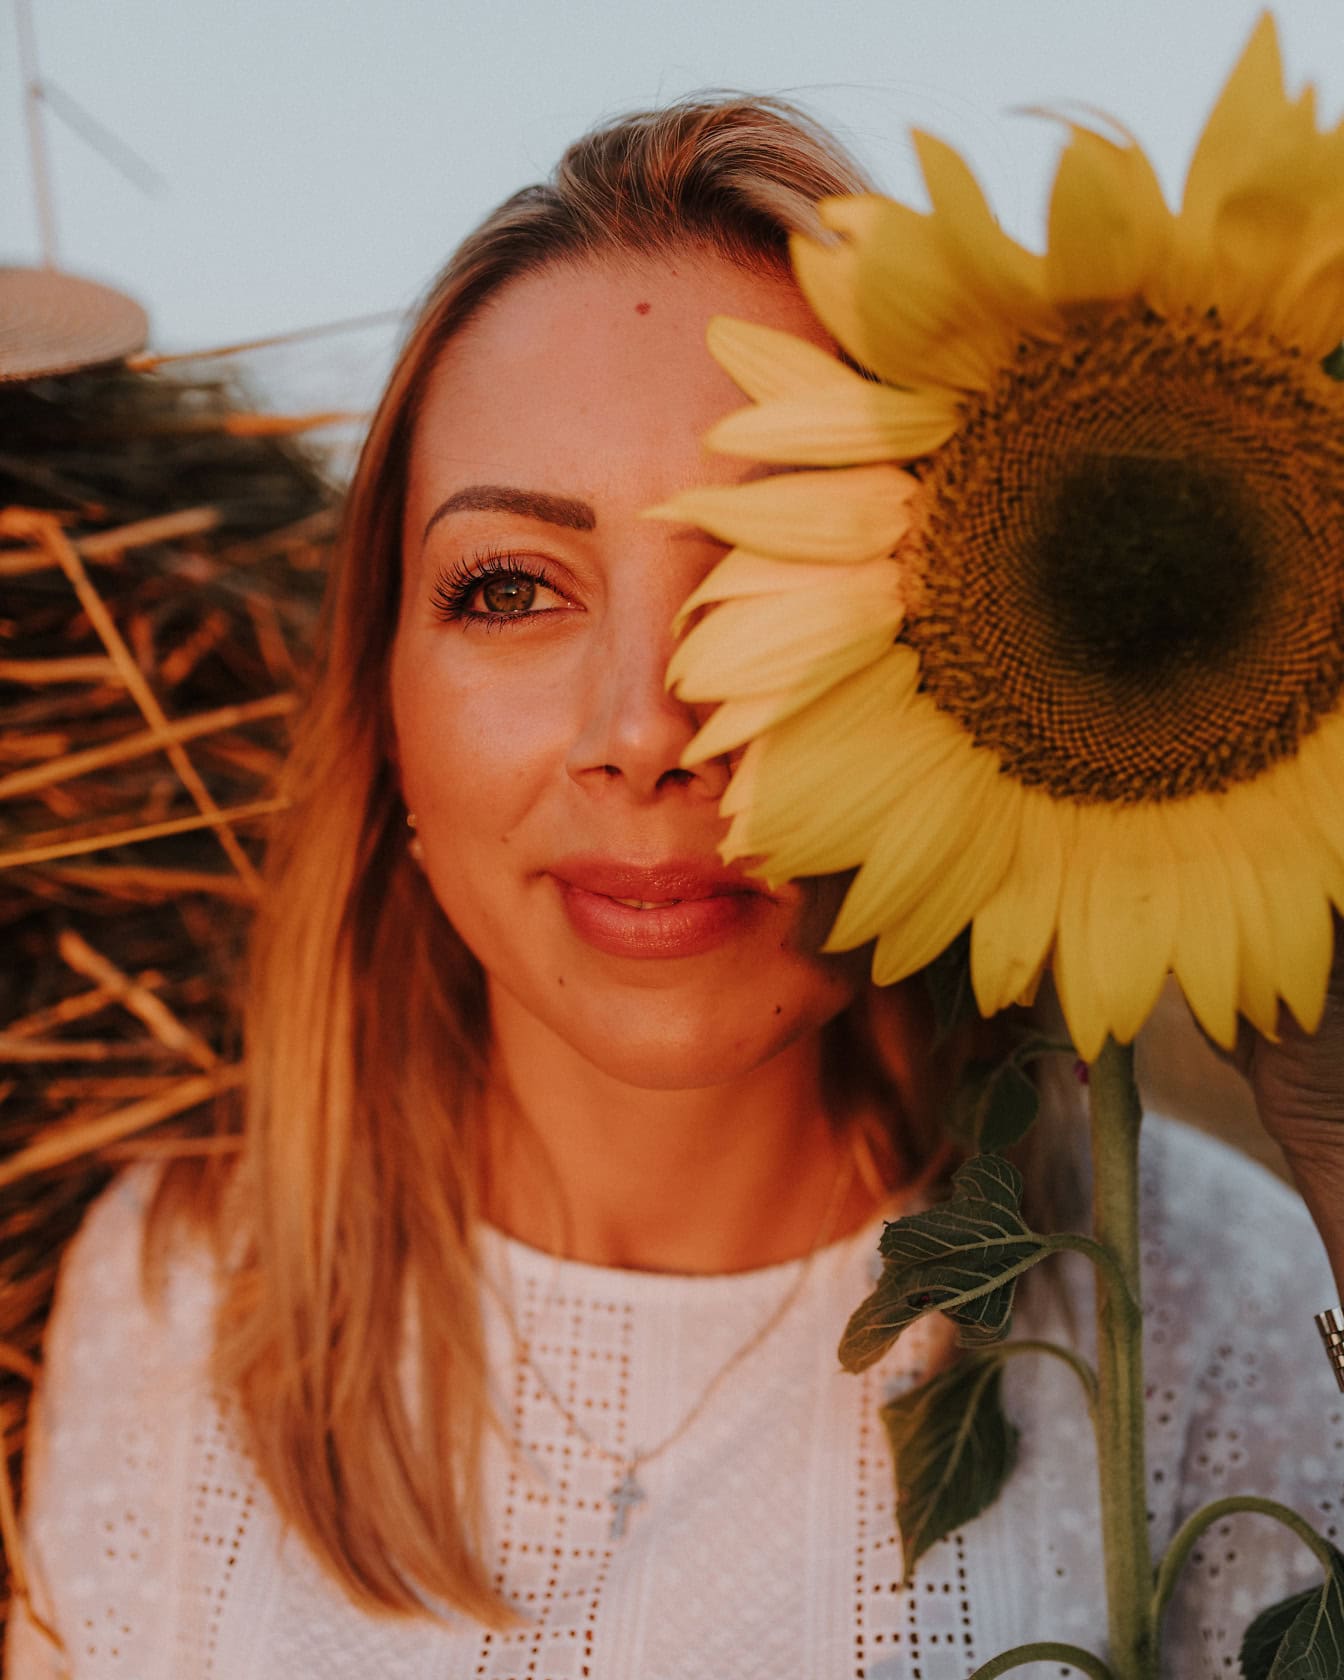 Potret seorang gadis cantik tersenyum dengan bunga matahari lebih dari setengah wajahnya